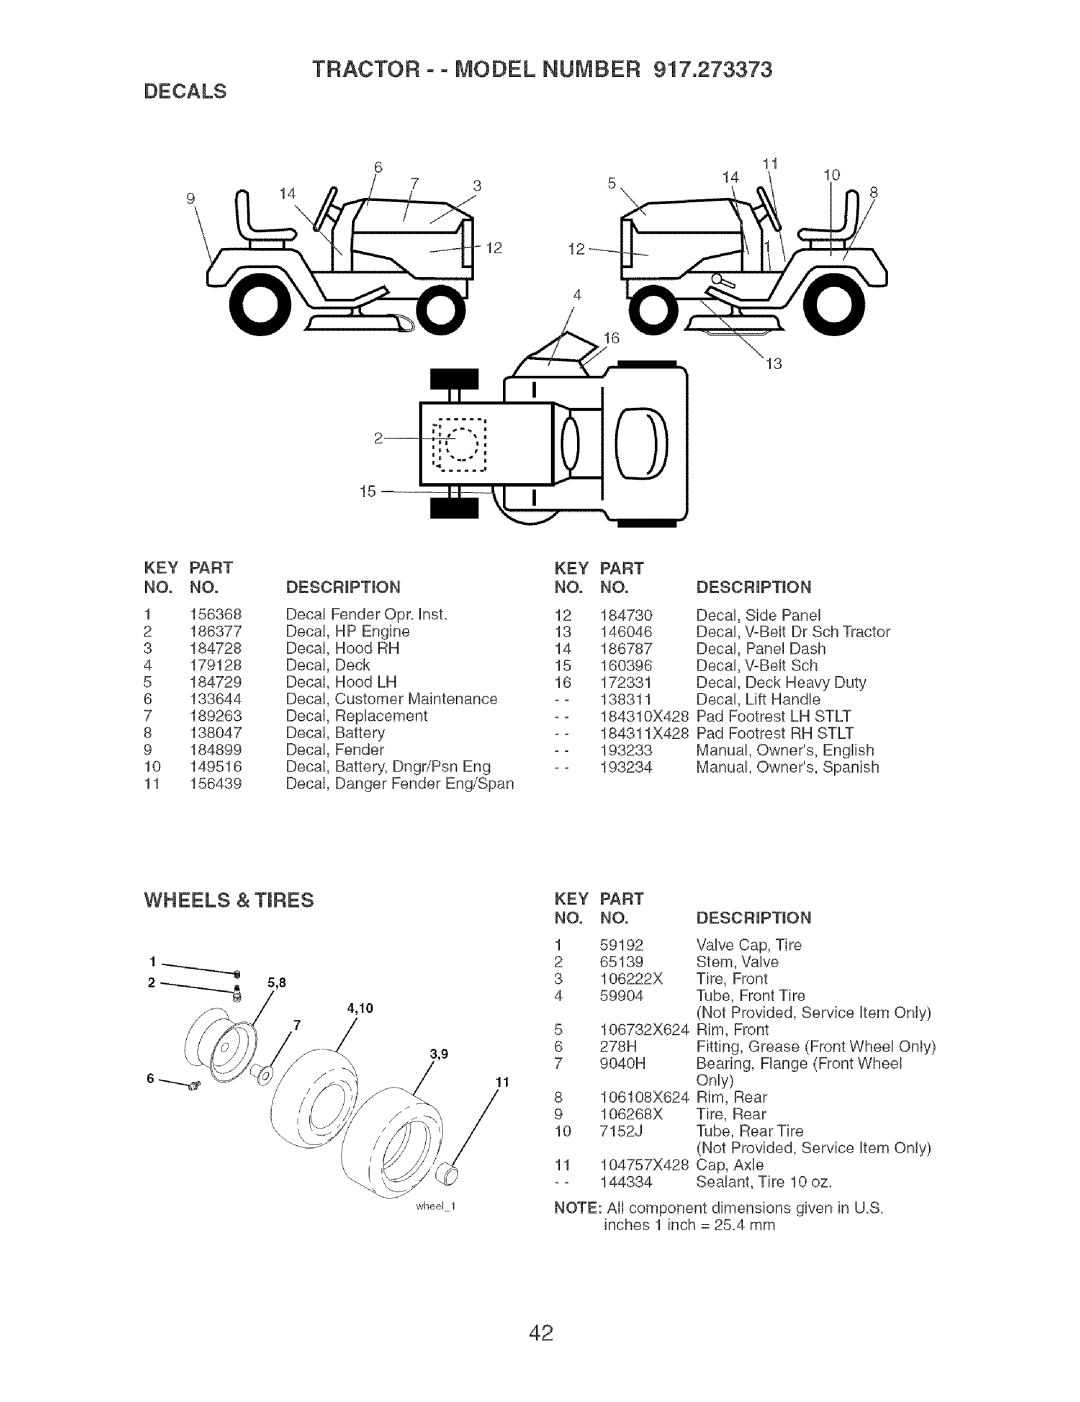 Craftsman 917.273373 owner manual Tractor - - Model Number, WHEELS & TmRES, Decals, Part, Description 